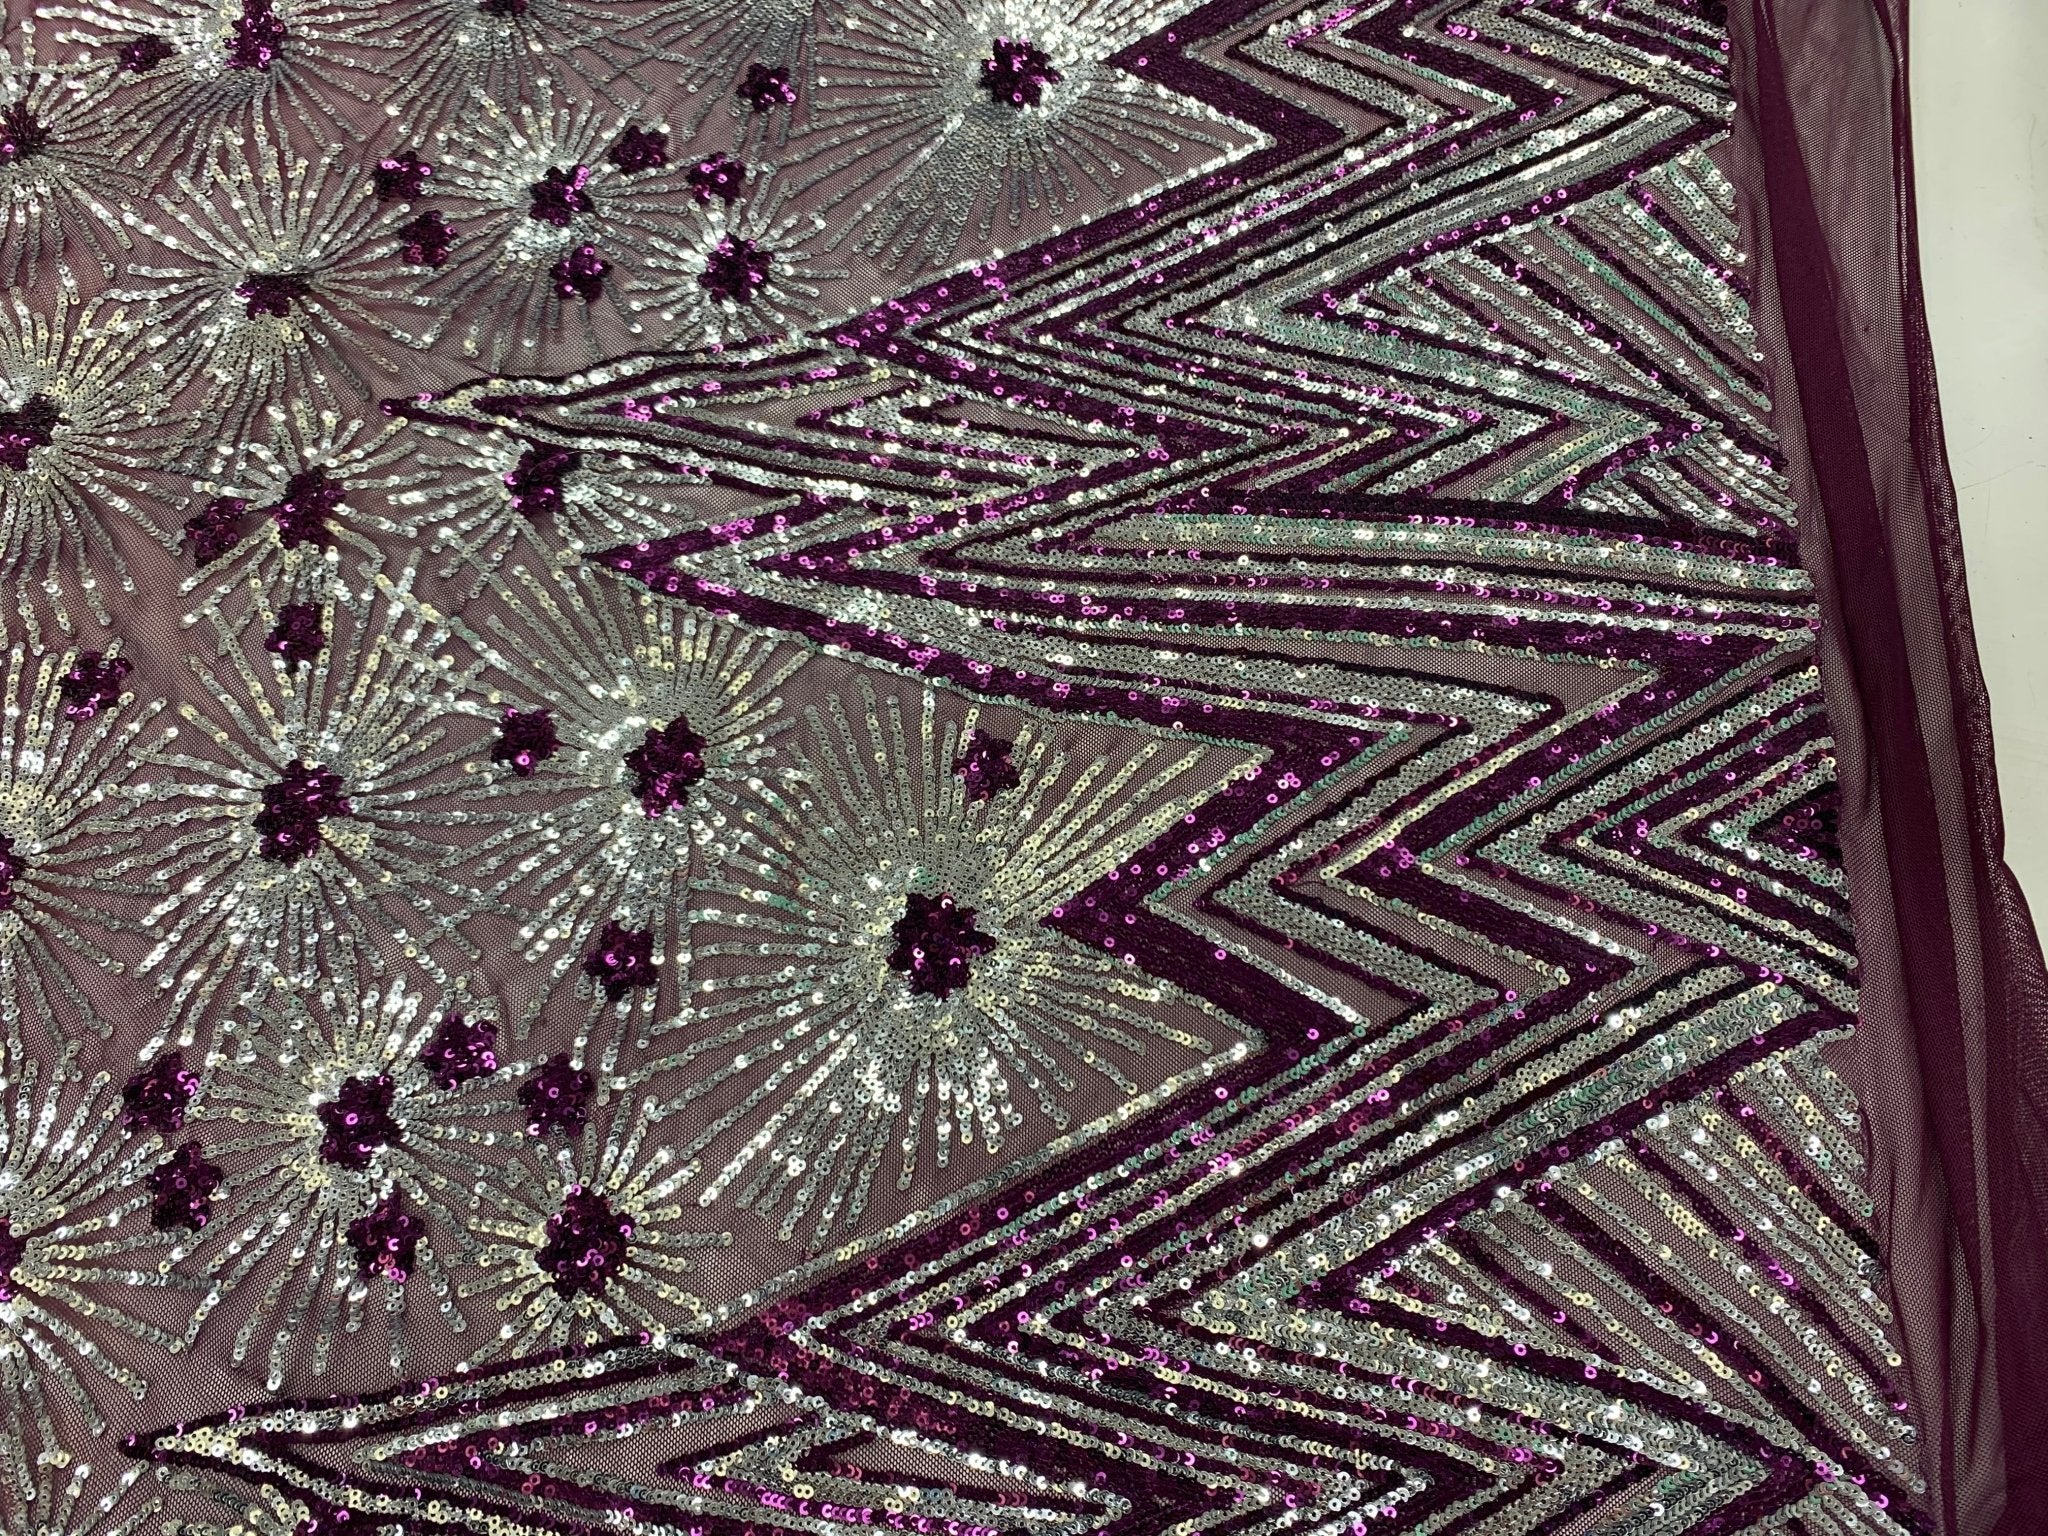 4 Way Stretch Iridescent Geometric Sequin Embroidered Mesh Lace FabricICEFABRICICE FABRICSPlum IridescentBy The Yard (58" Wide)4 Way Stretch Iridescent Geometric Sequin Embroidered Mesh Lace Fabric ICEFABRIC |Plum Iridescent